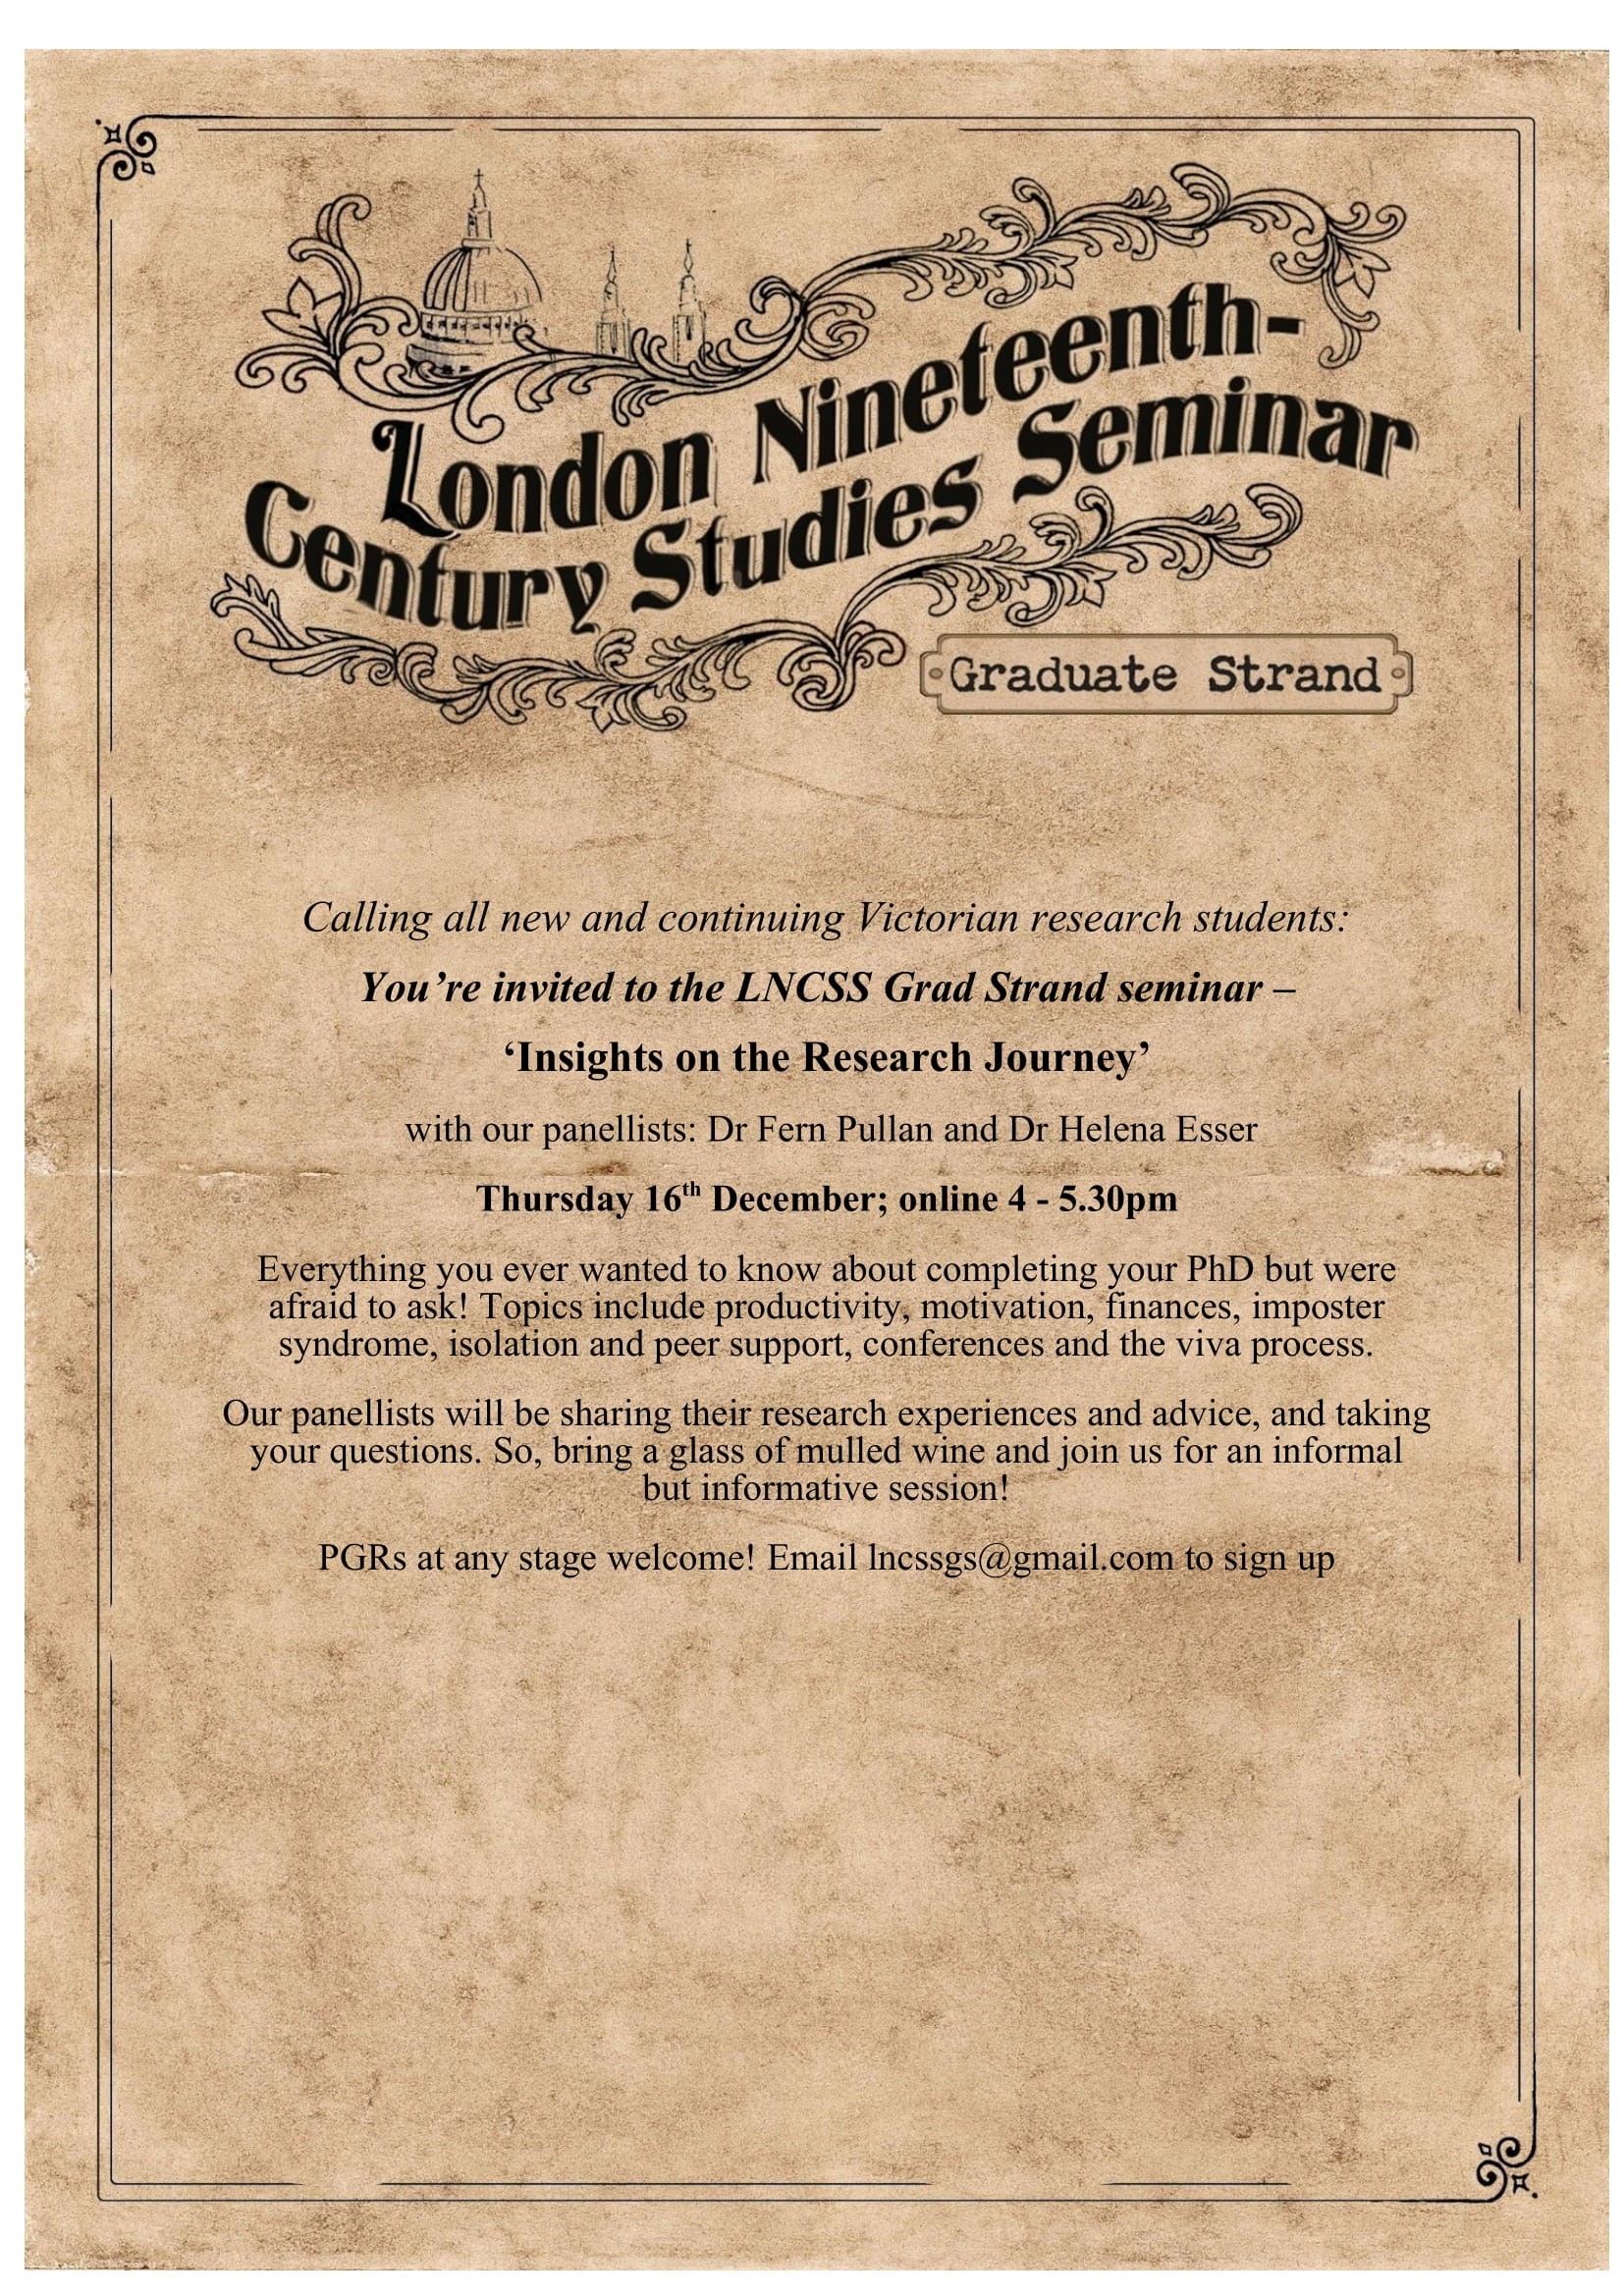 London 19th century studies seminar_16Dec2021_Poster